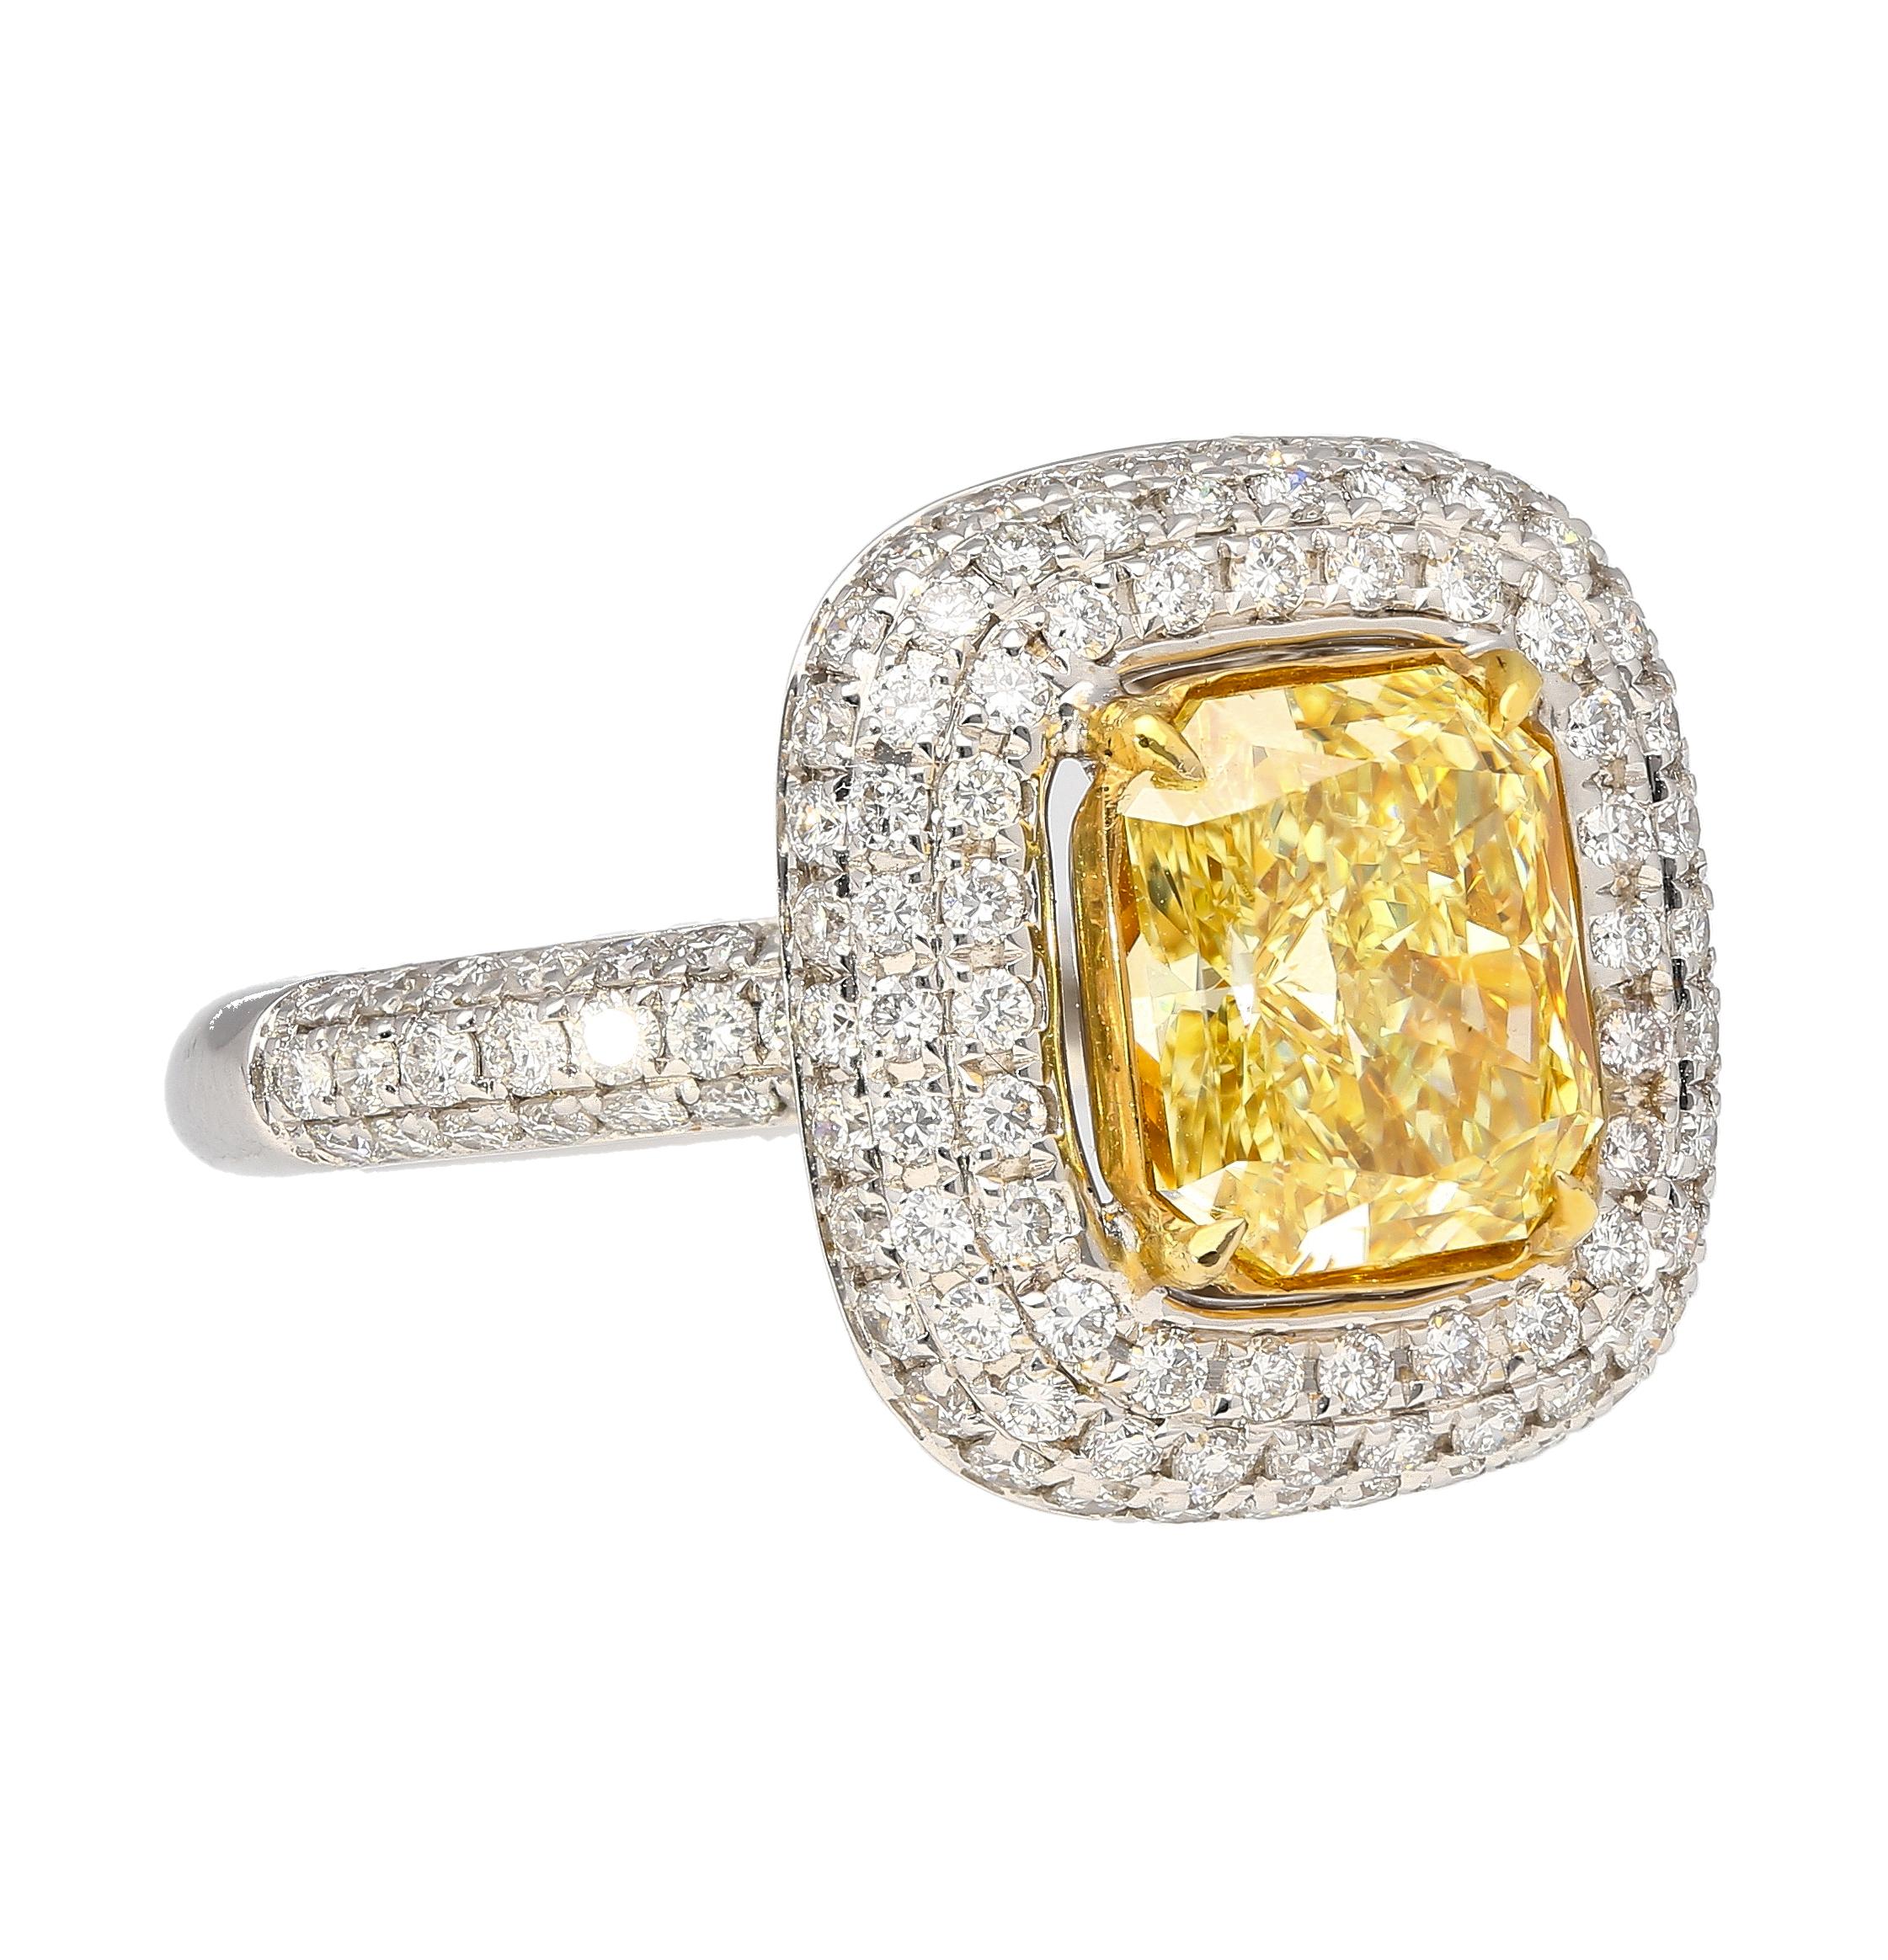 are kay jewelers diamonds gia certified